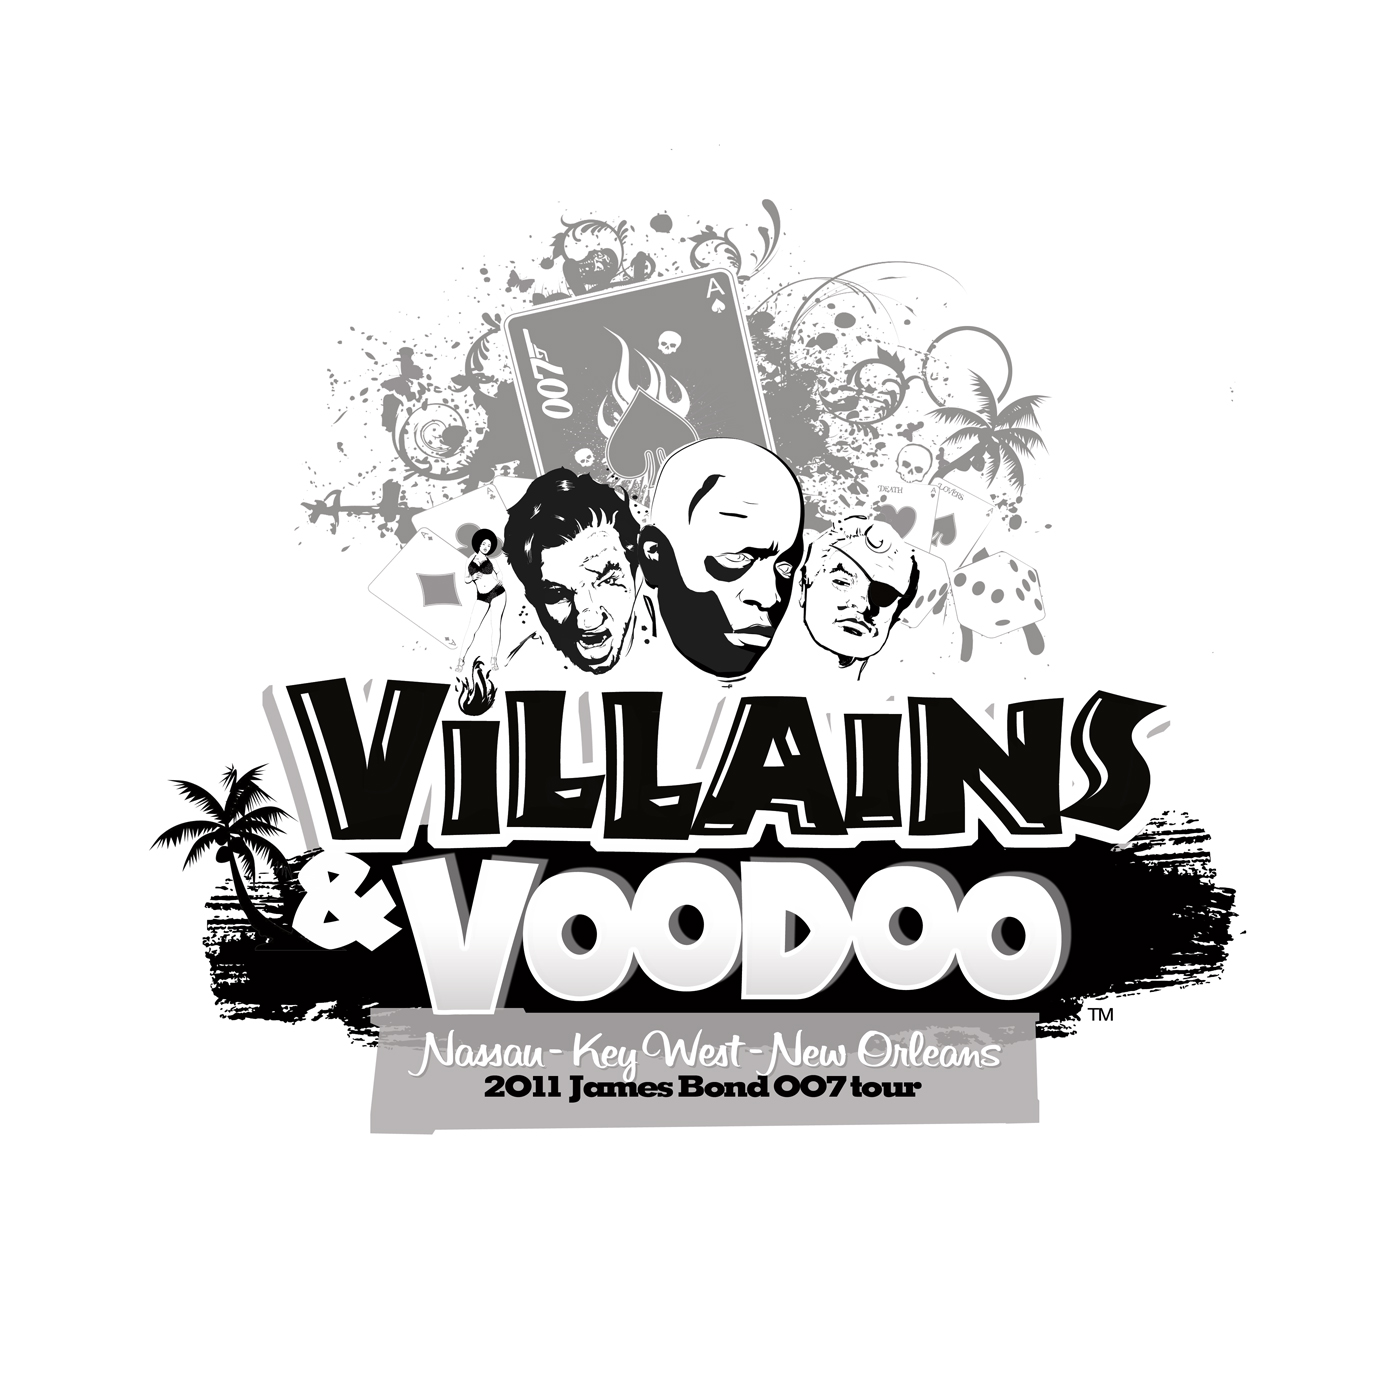 villains and voodo bw.jpg